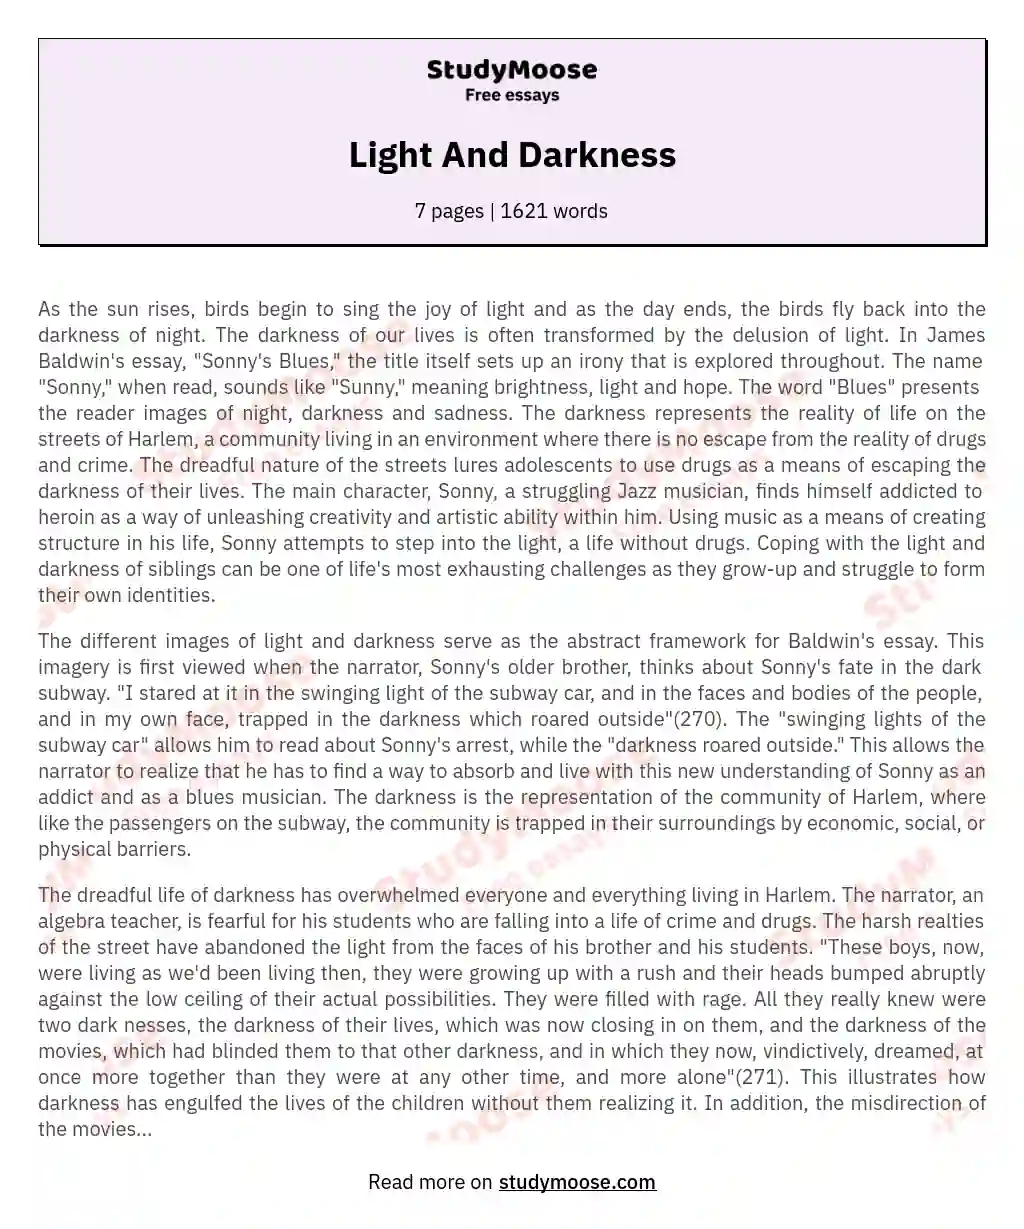 Light And Darkness essay